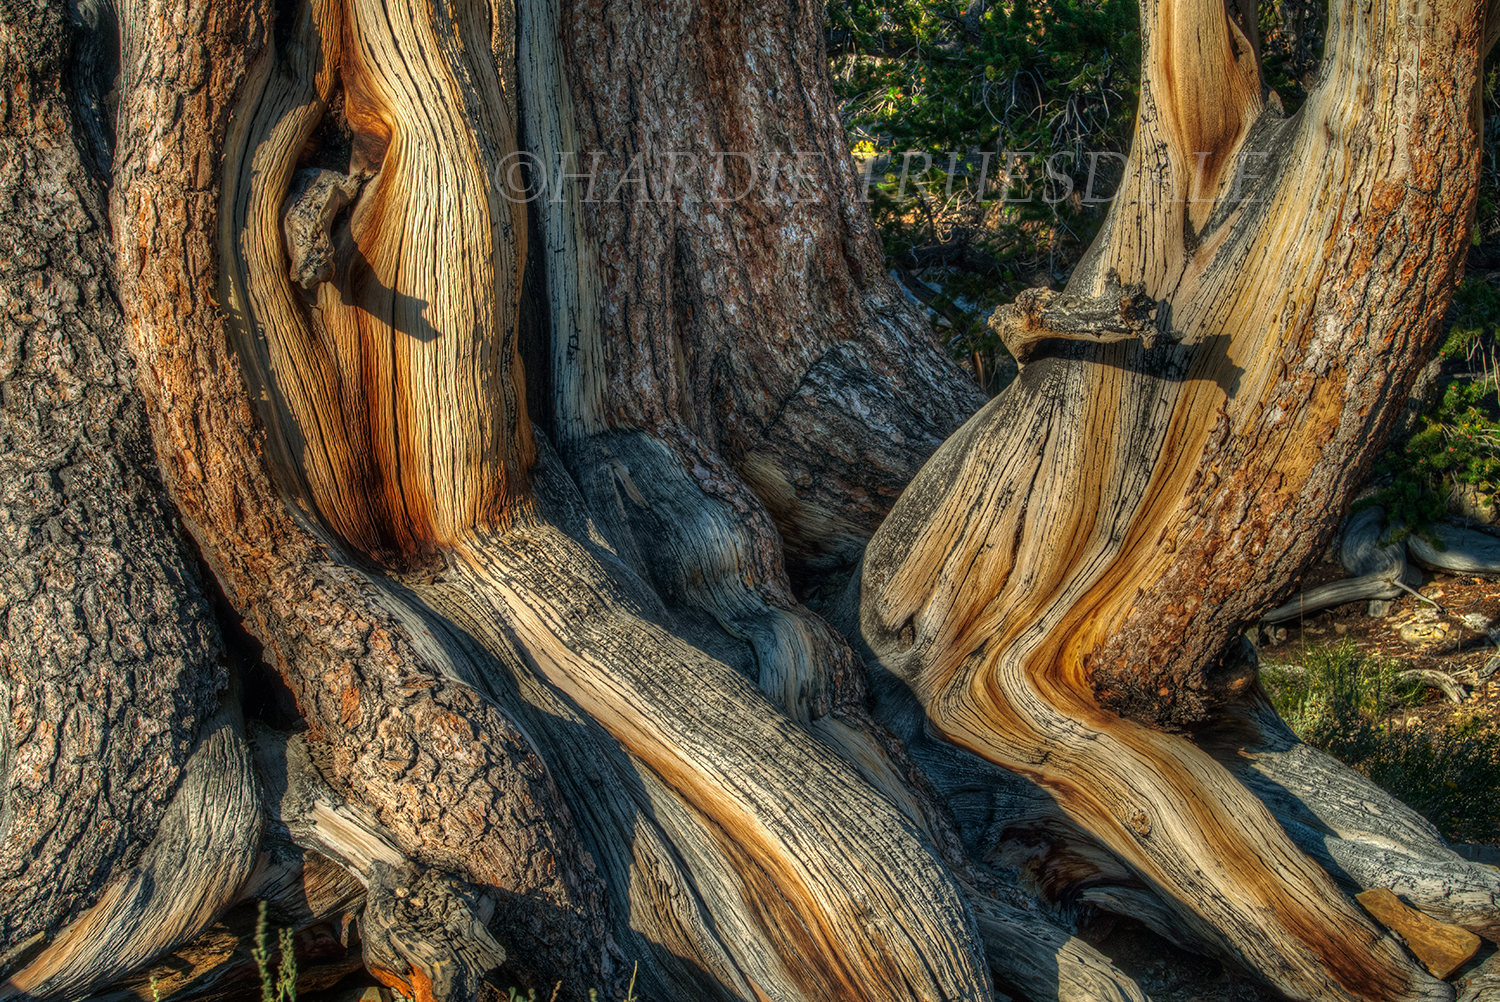 CA#175 "Bristlecone Pine Figures, Inyo"